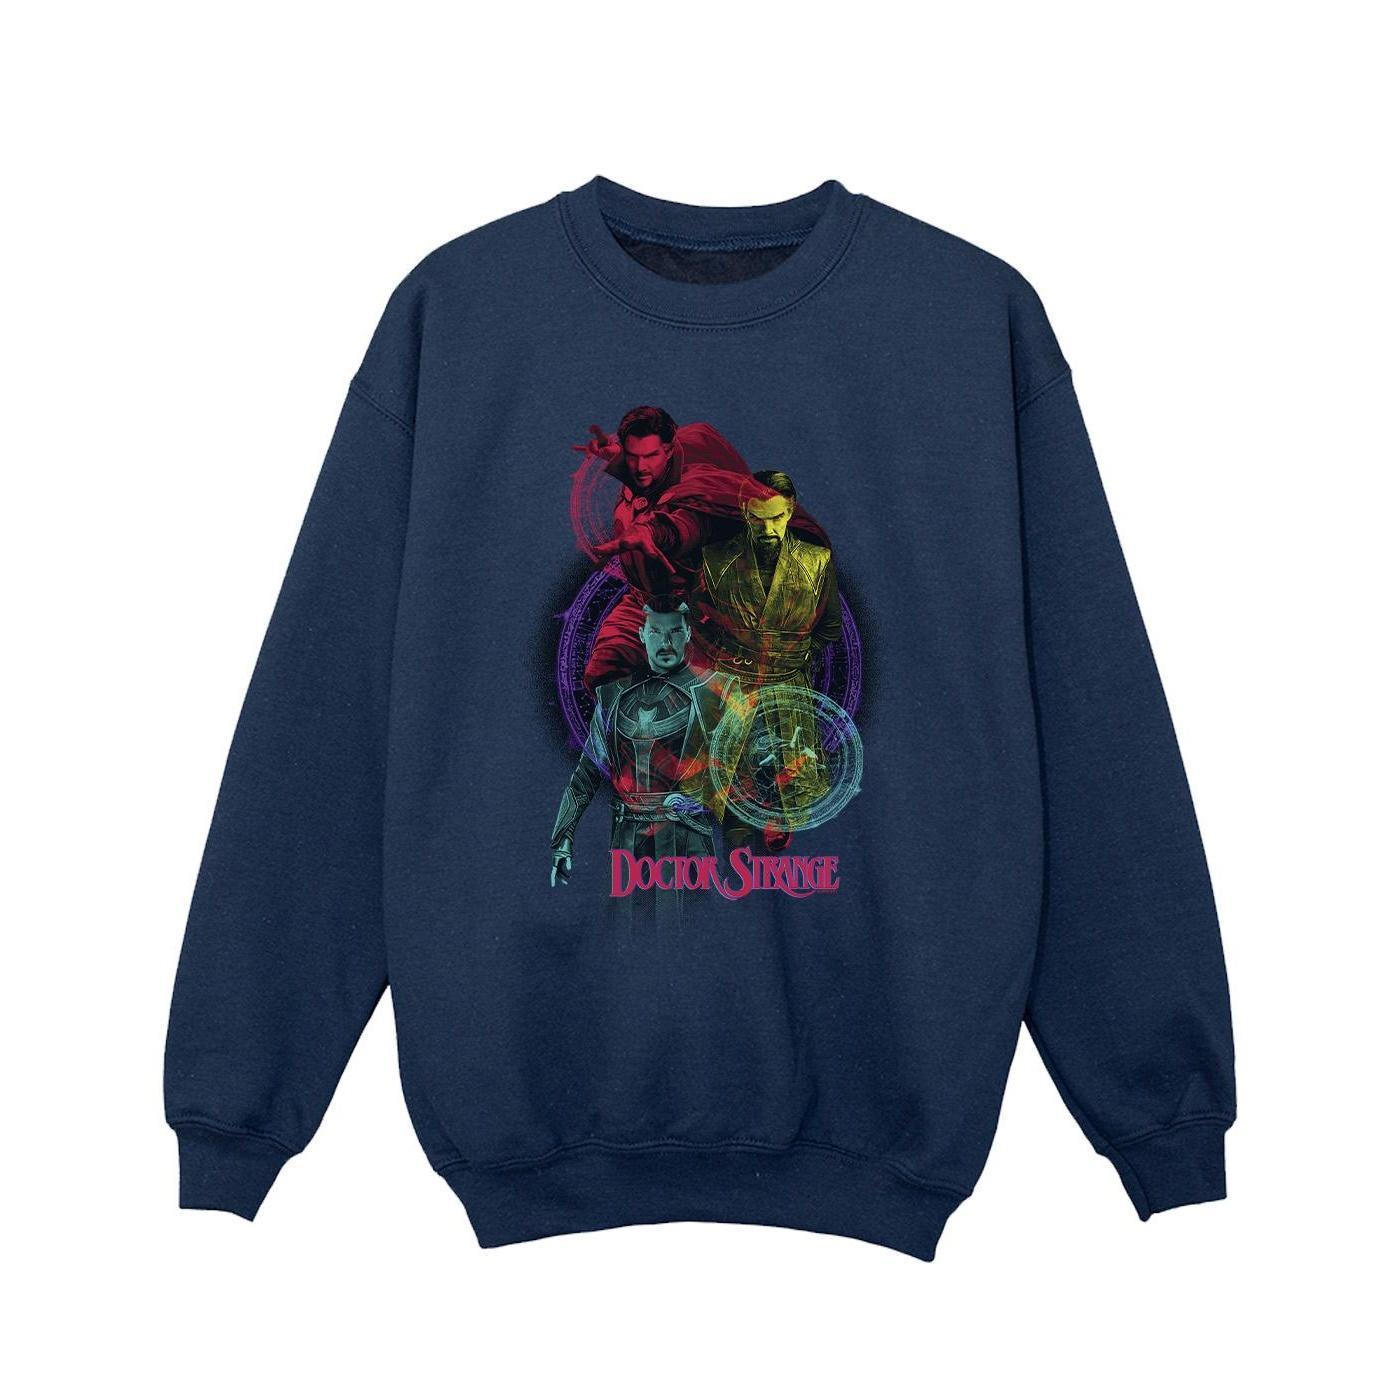 Marvel Girls Doctor Strange Rainbow Sweatshirt (Navy Blue) (7-8 Years)